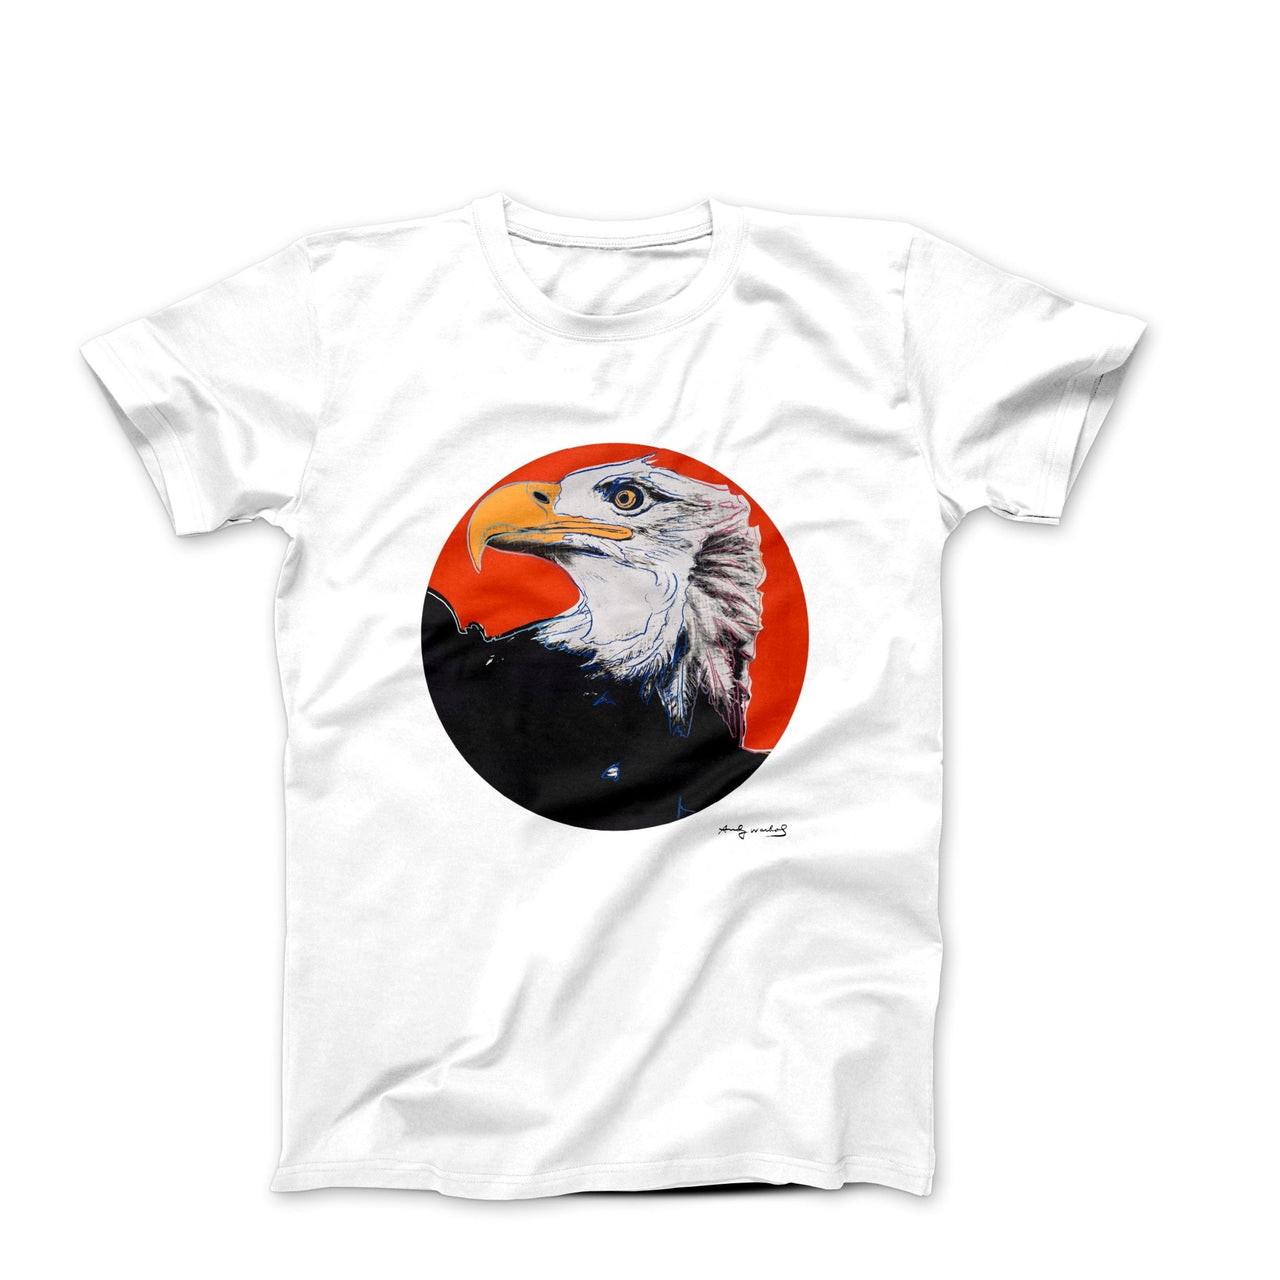 Andy Warhol Bald Eagle I (1983) Artwork T-shirt - Clothing - Harvey Ltd